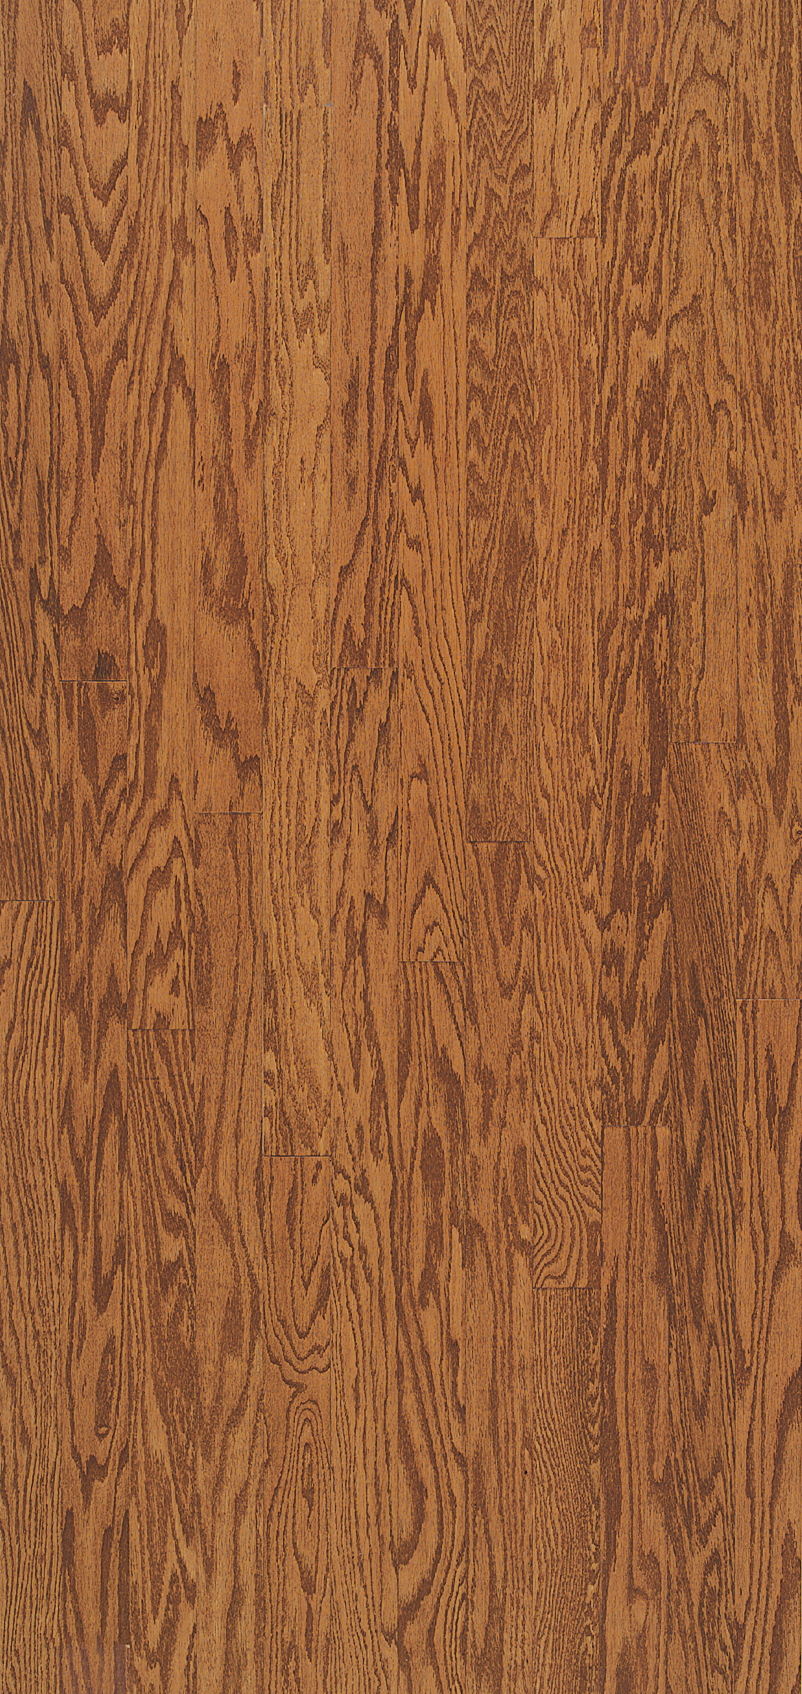 Gunstock 3" - Turlington Collection - Engineered Hardwood Flooring by Bruce